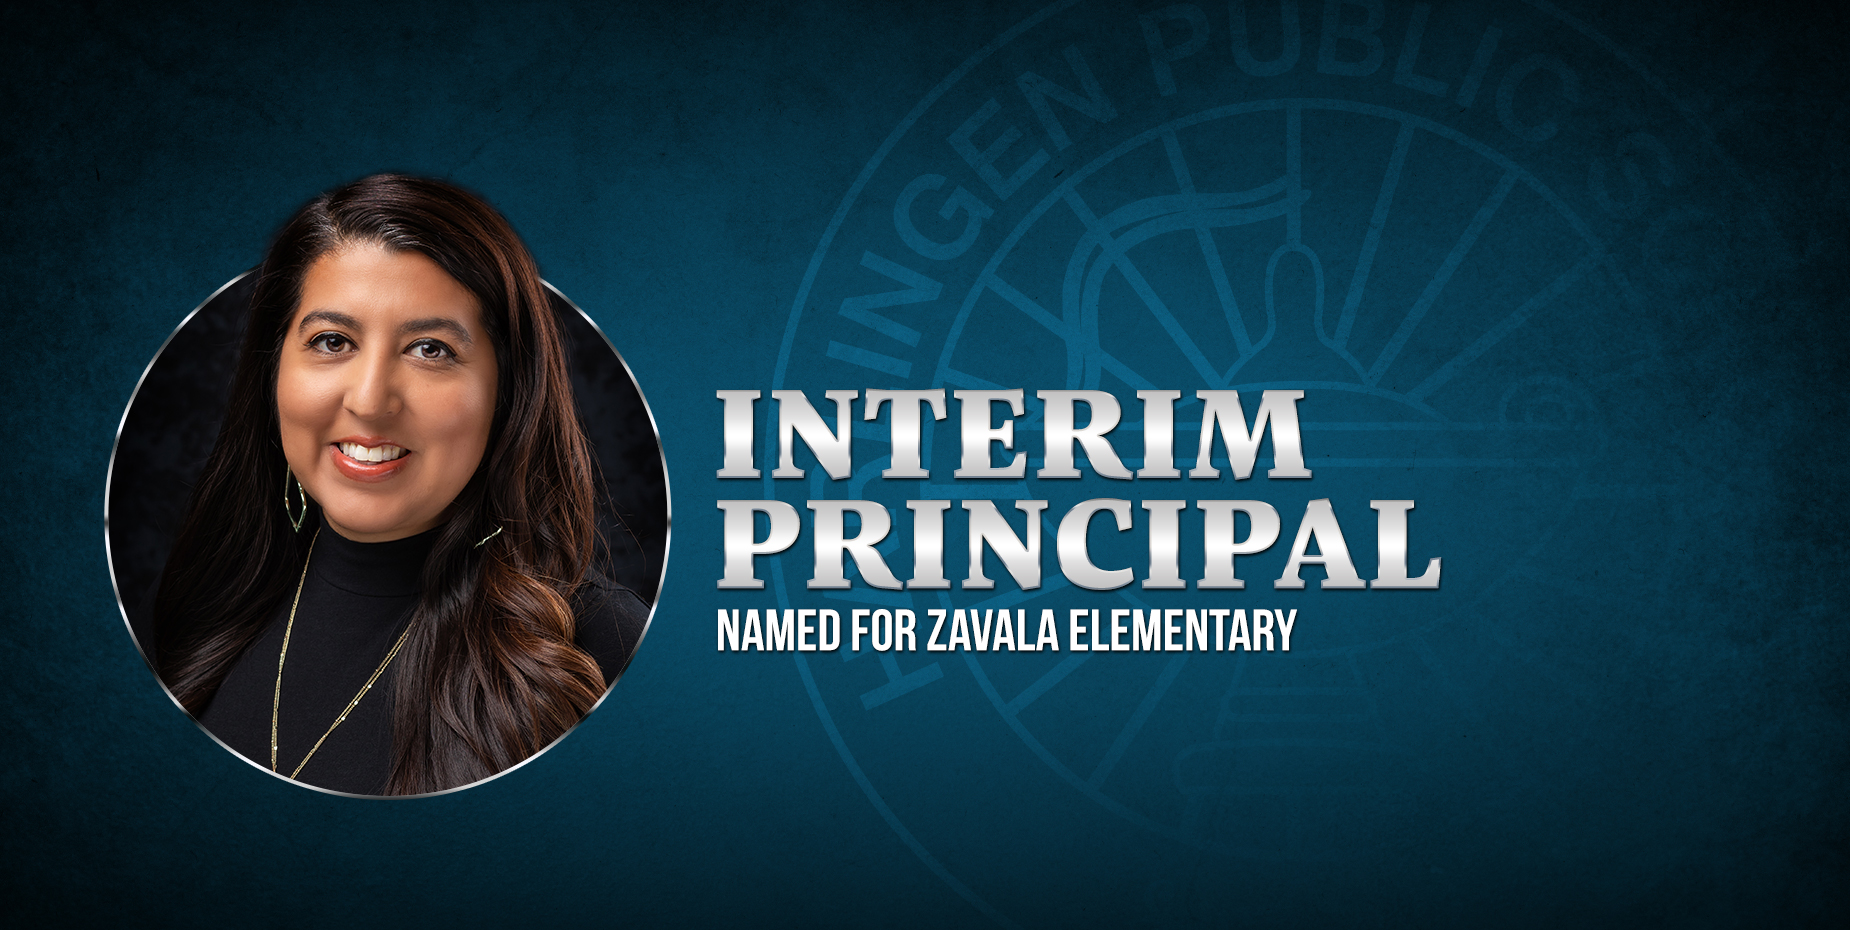 Interim Principal named for Zavala Elementary